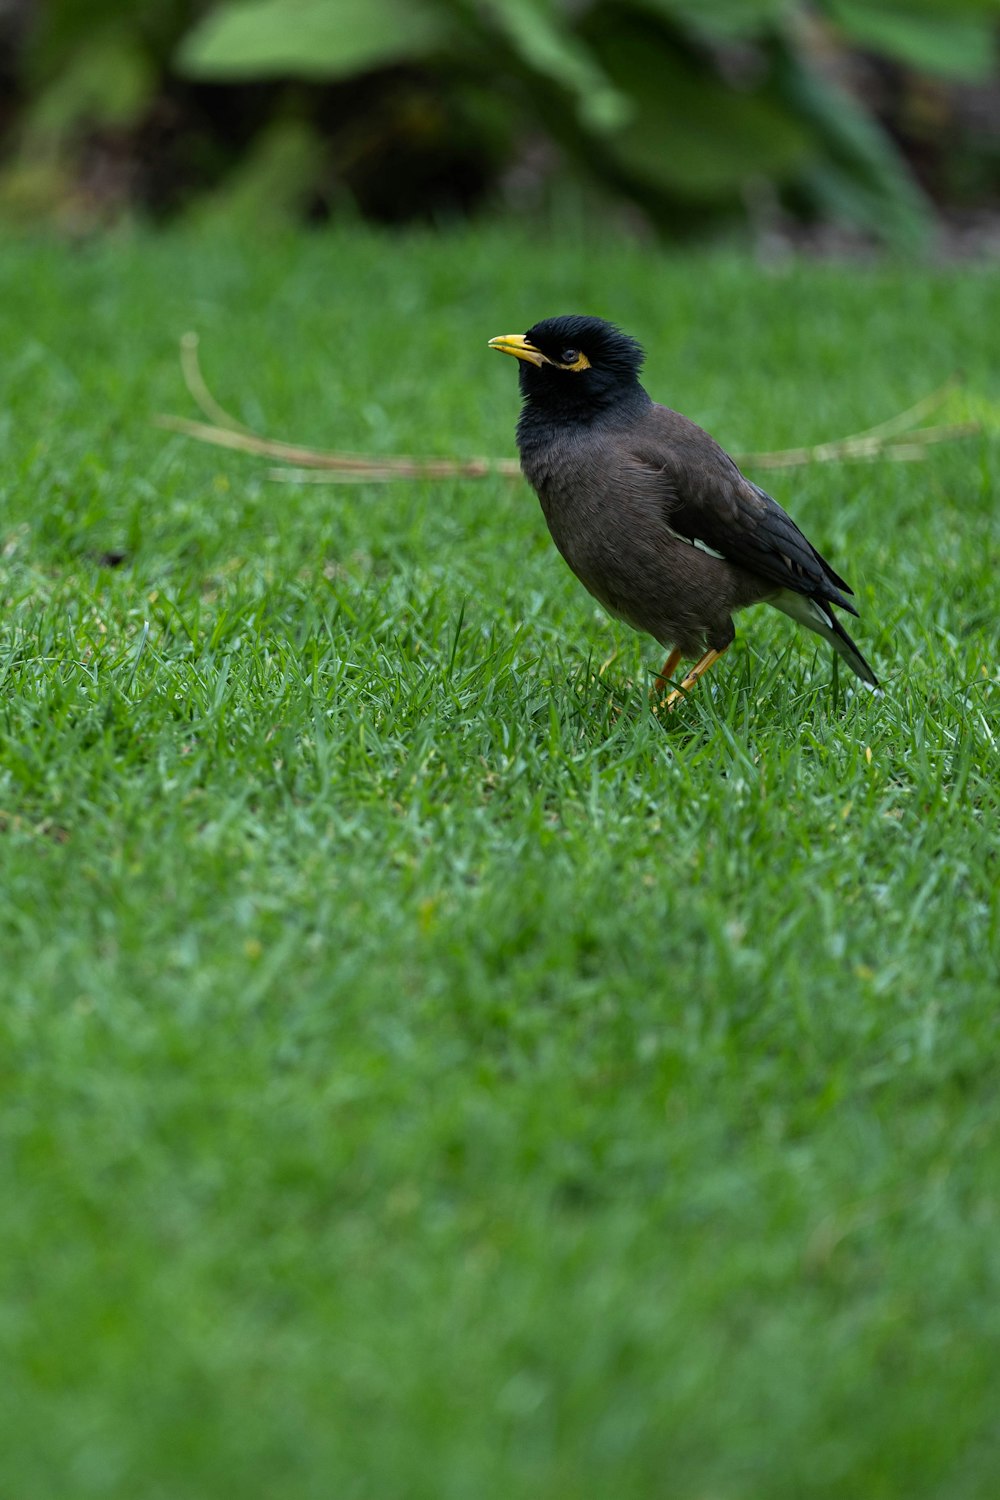 a black bird standing on top of a lush green field